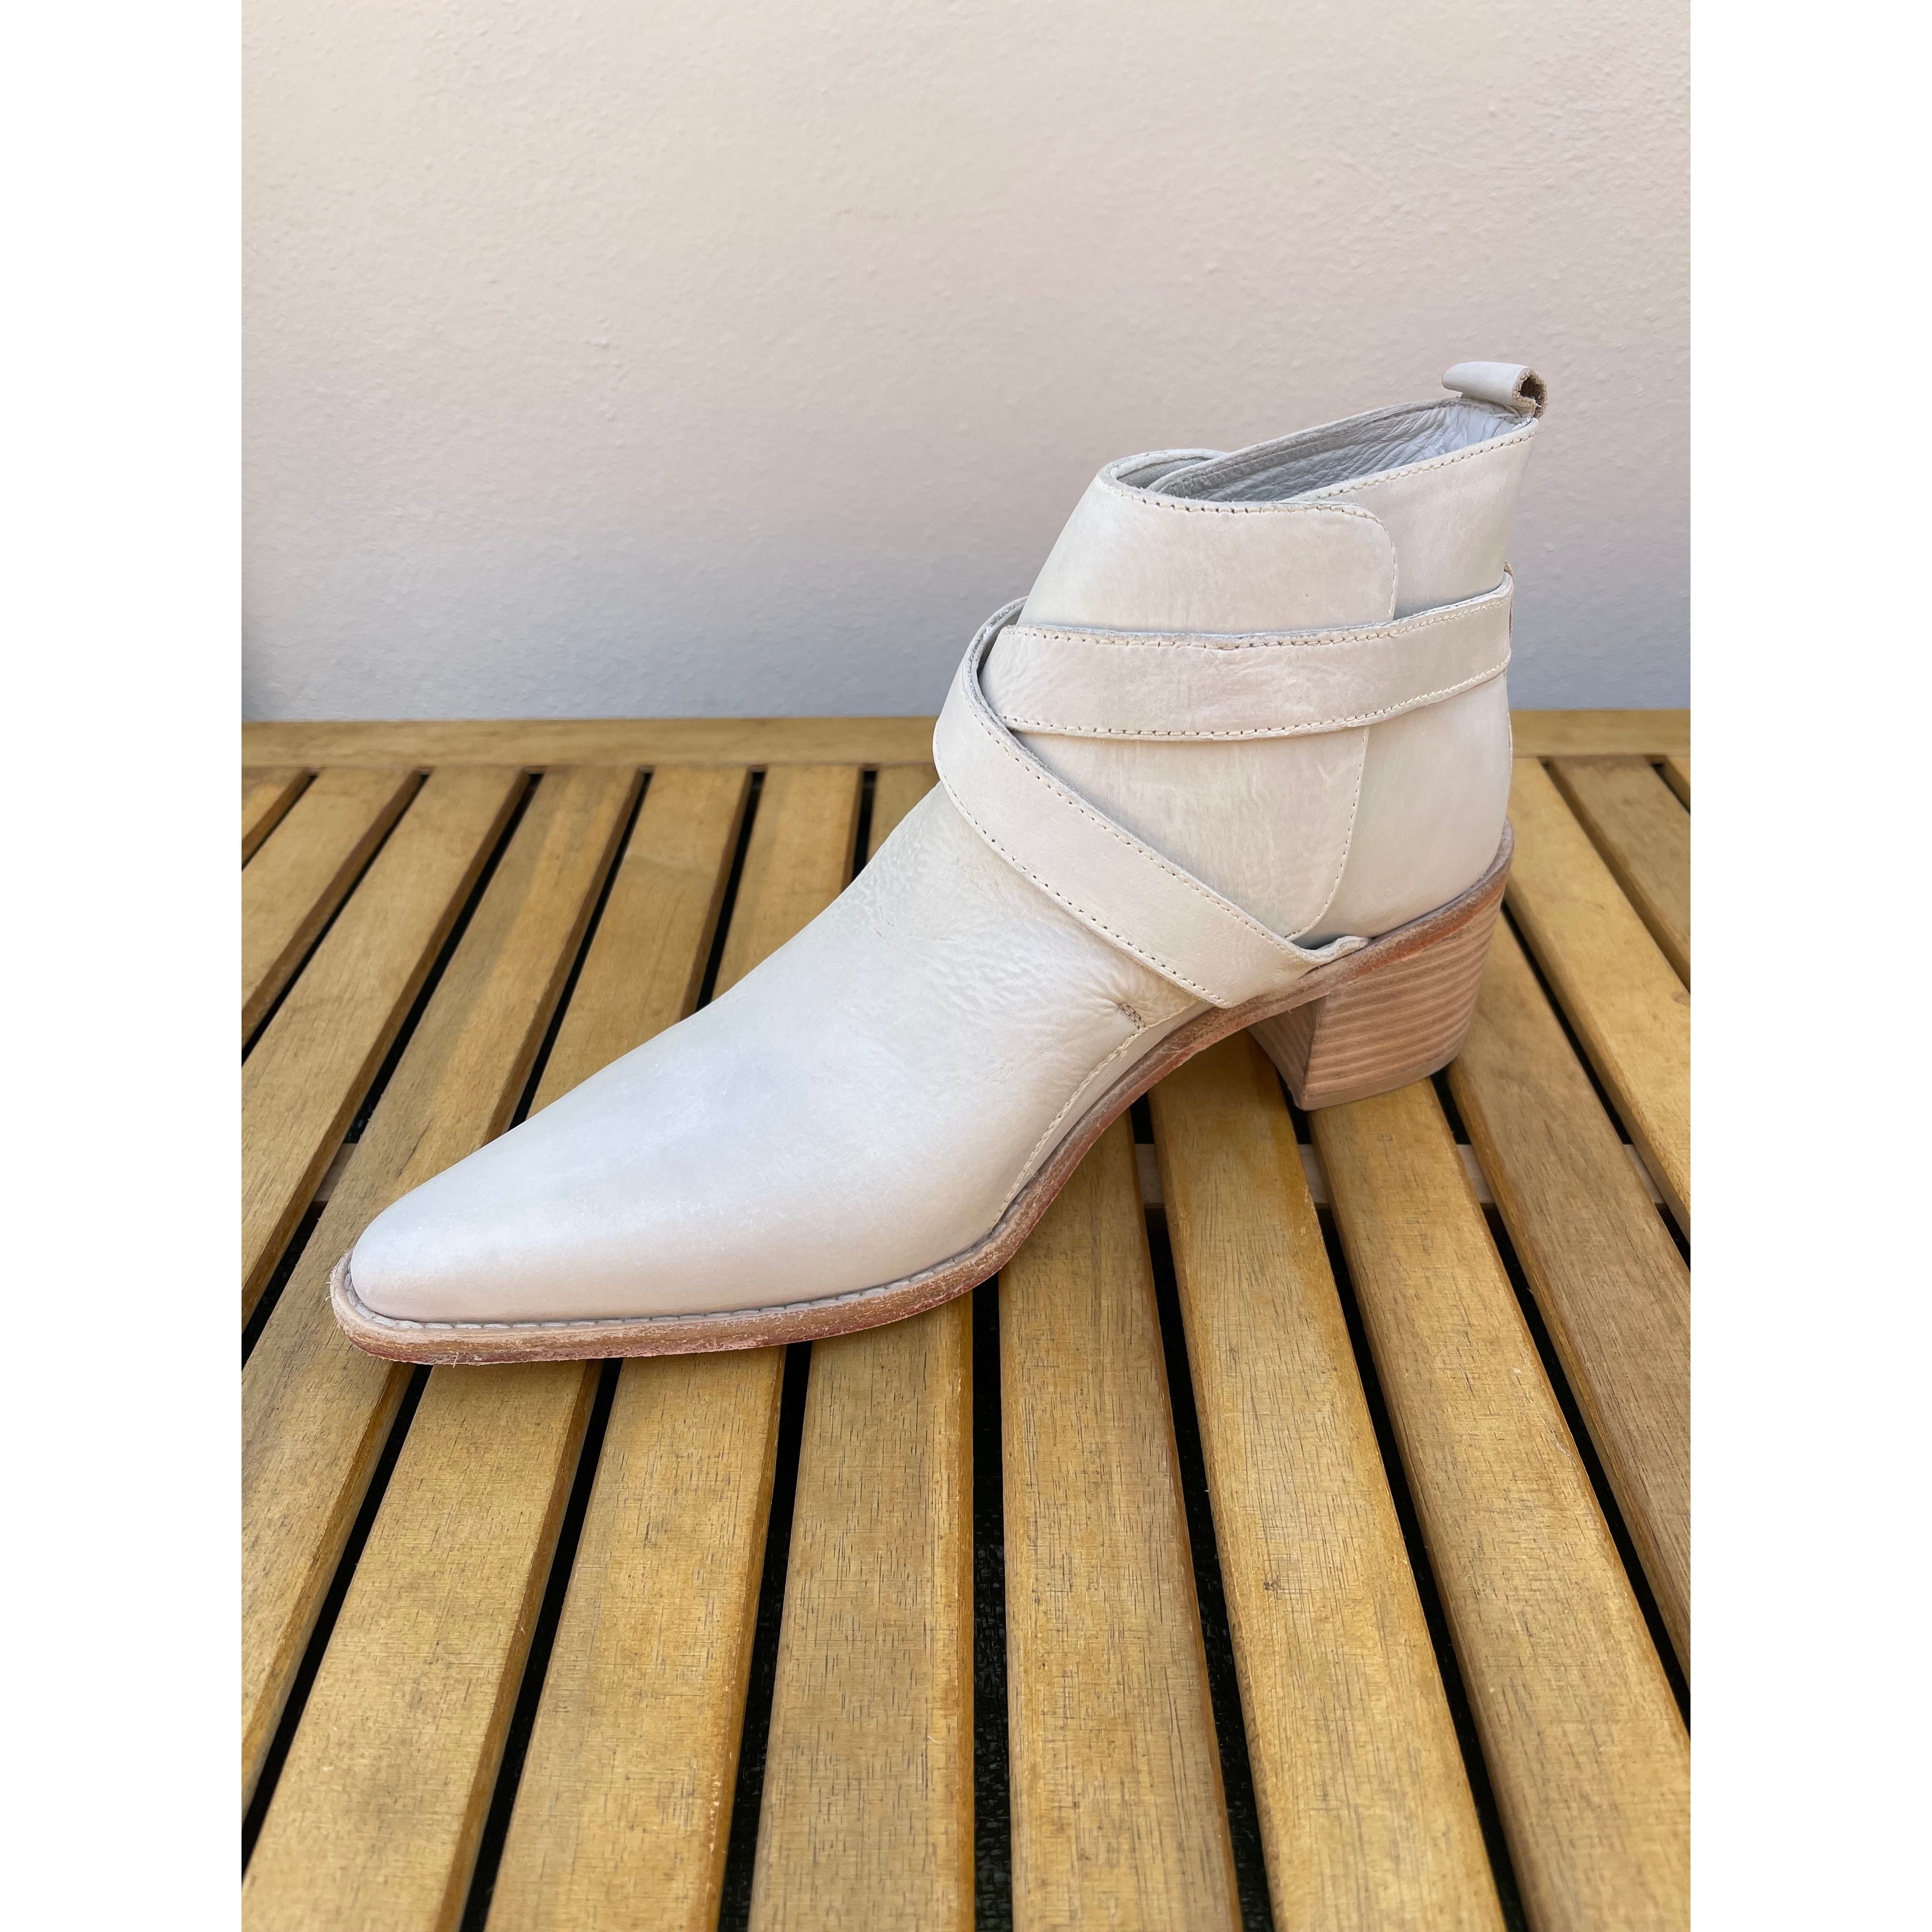 Get FP Back Loop Boots at Vagabond Apparel - Women Footwear